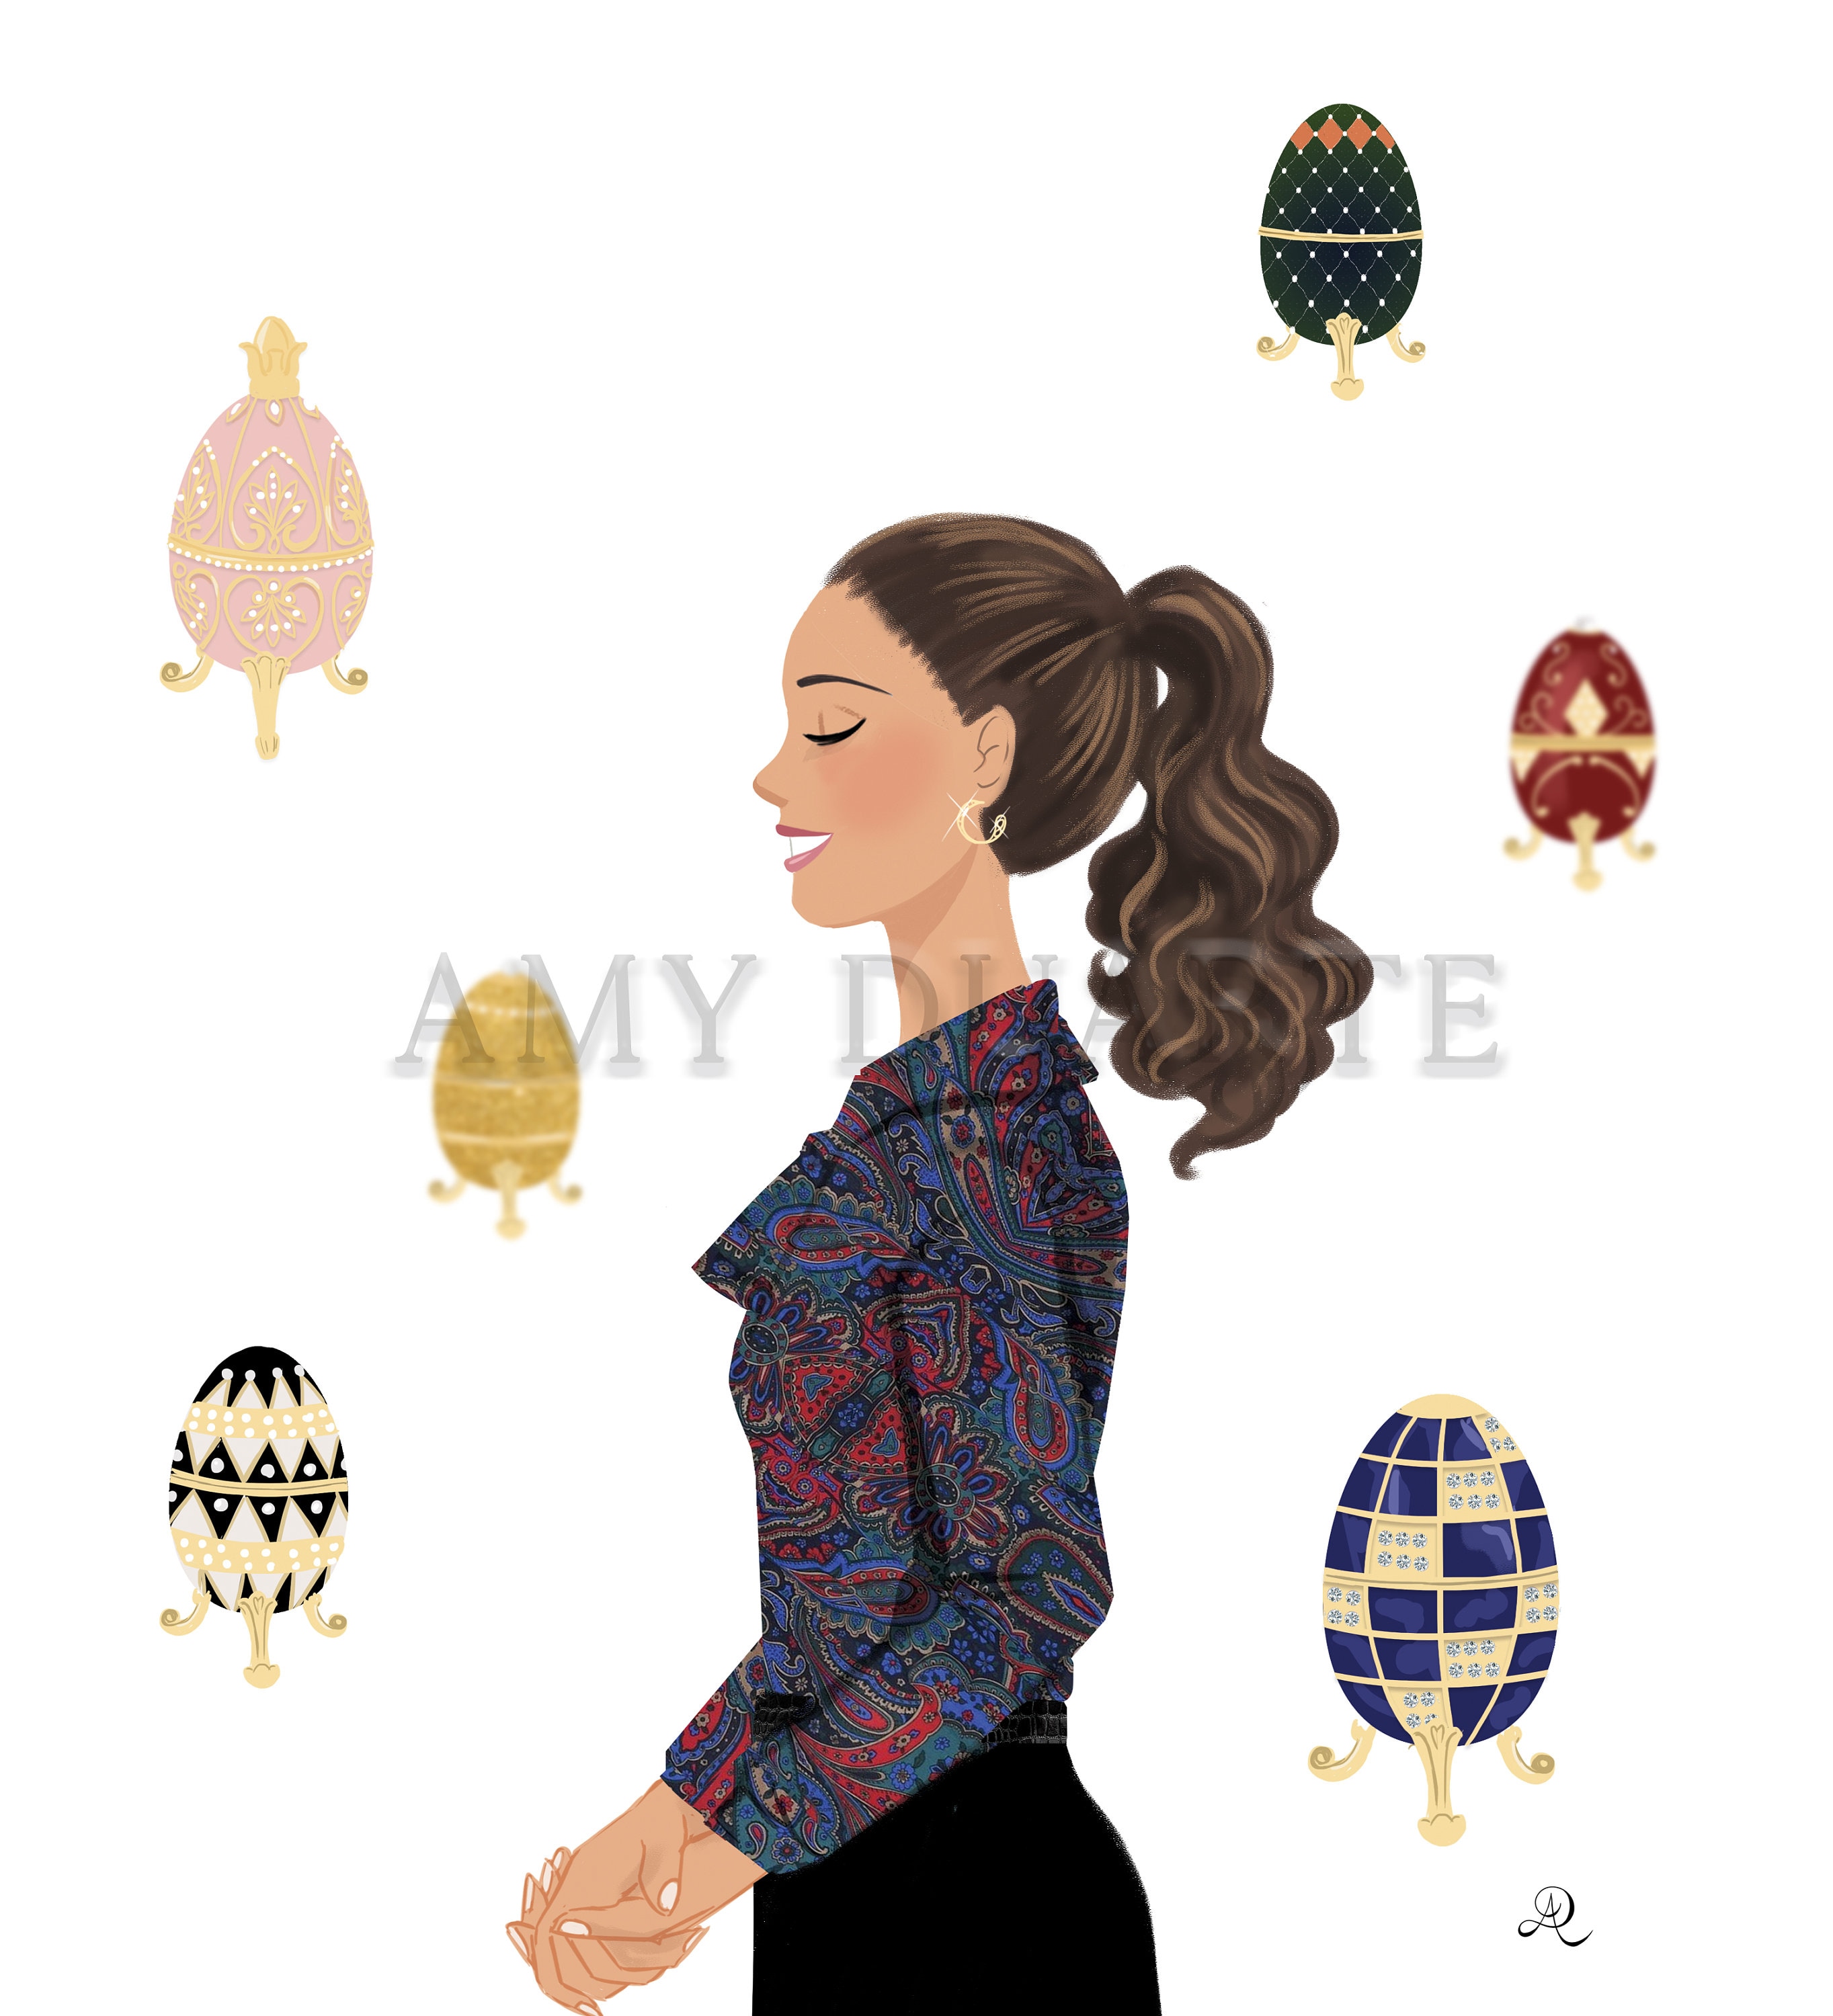 Duchess of Cambridge Kate Middleton faberge Eggs 